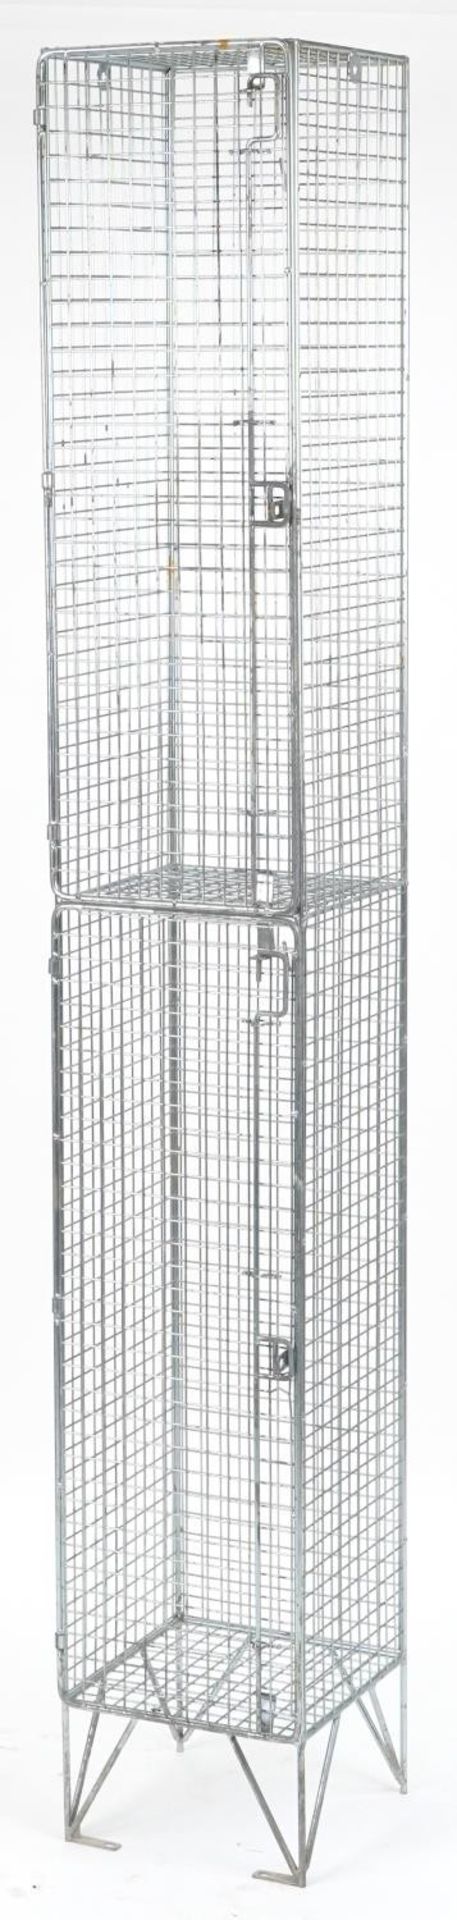 Industrial steel wire cage, 198cm H x 31cm W x 31cm D